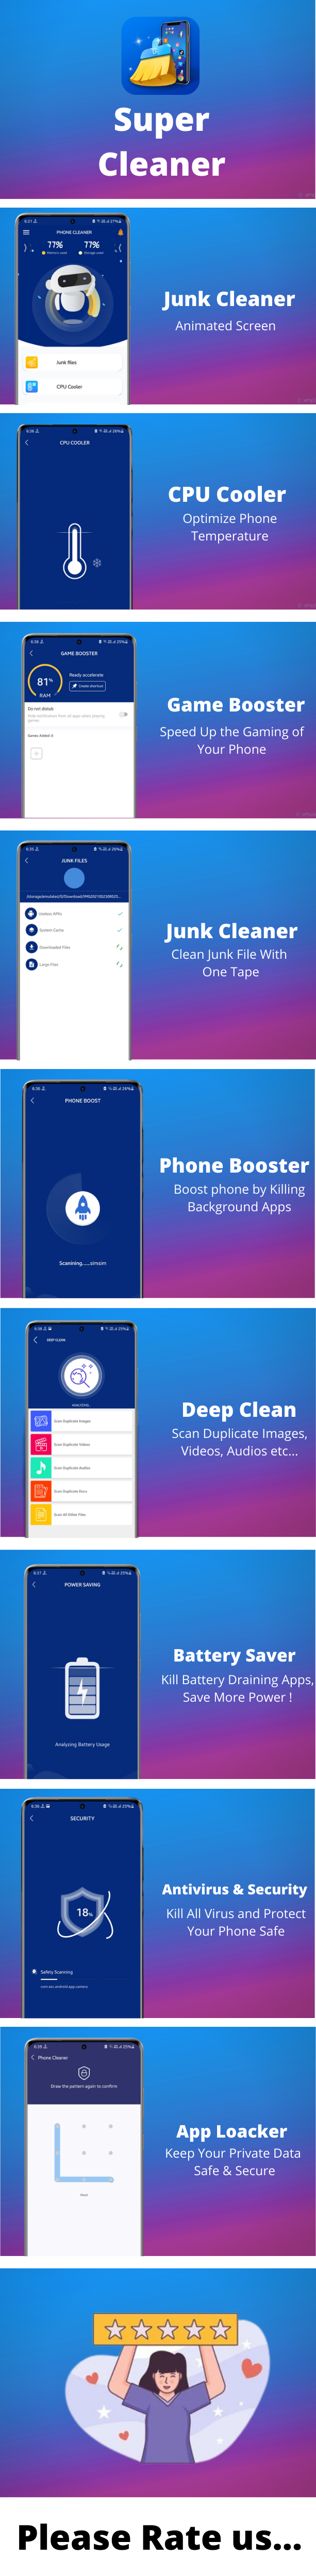 Phone cleaner and phone booster - Battery saver, App Lock, Antivirus, Phone cleaner master - 7